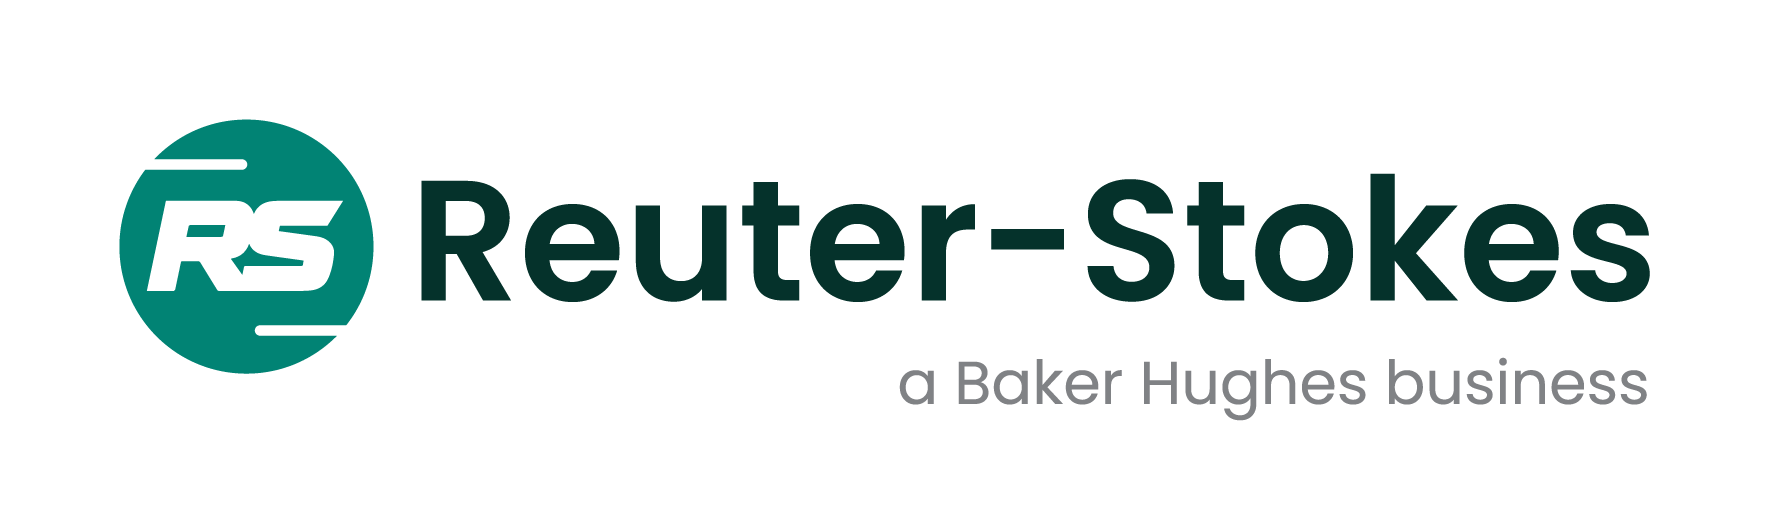 Reuter-Stokes, a Baker Hughes business Startseite